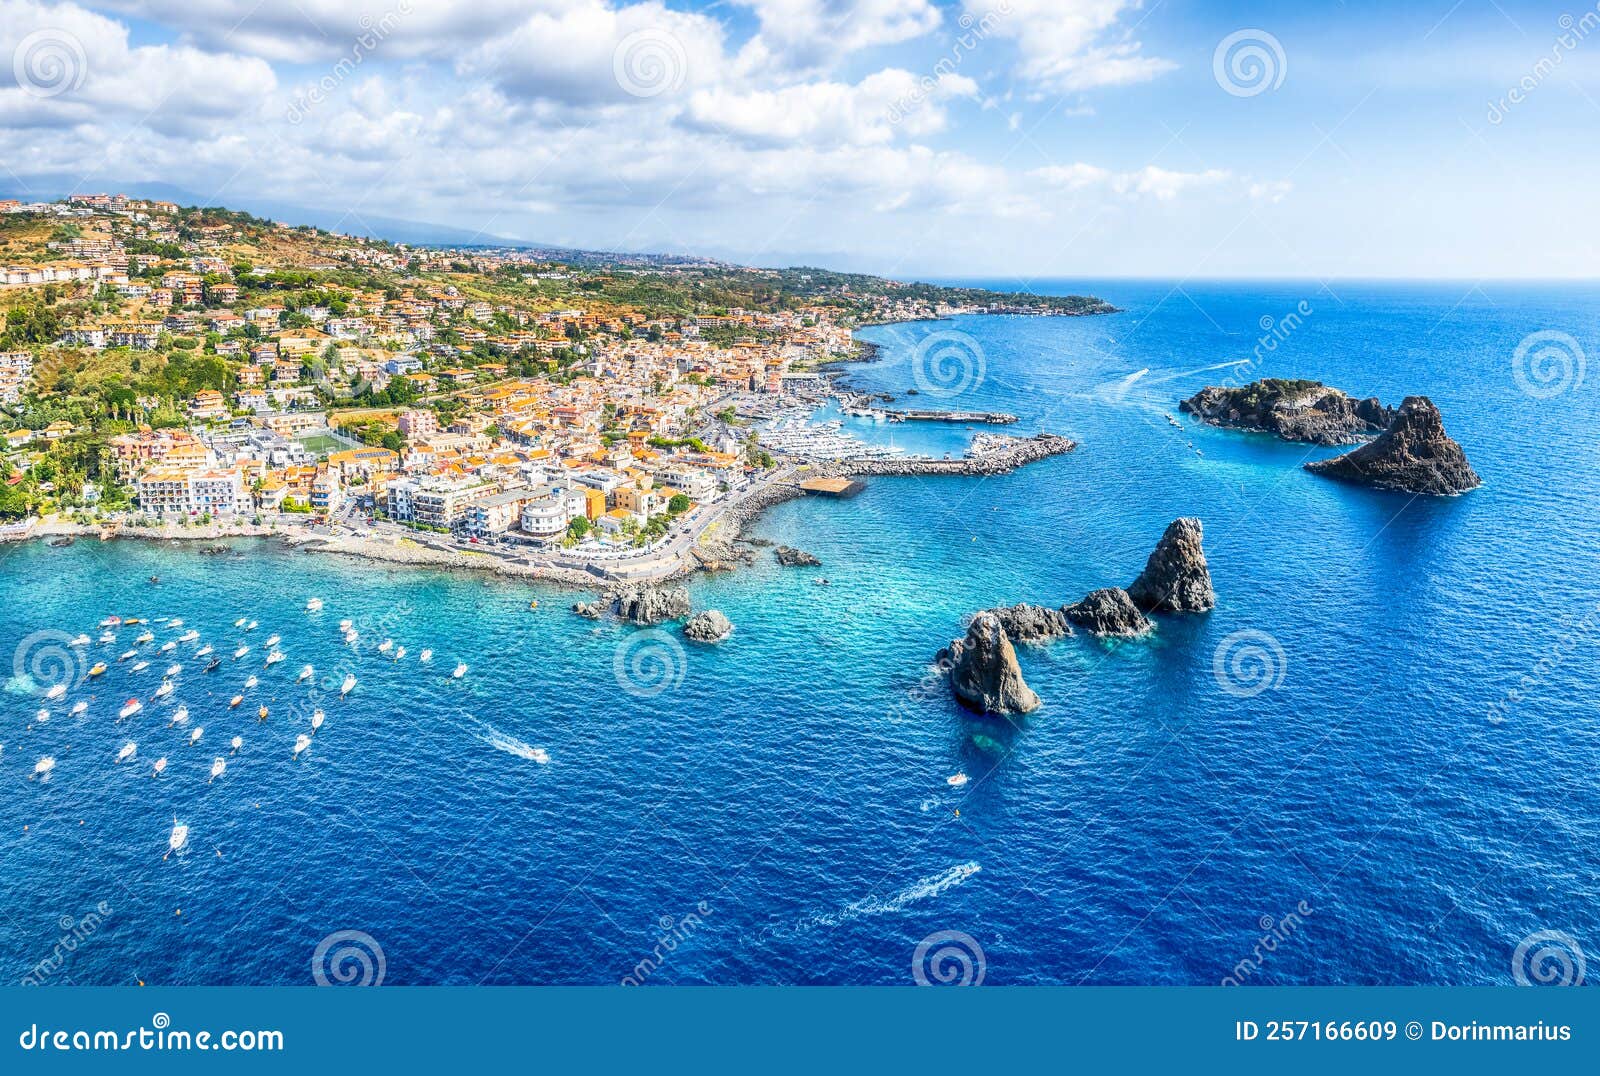 landscape with aerial view of aci trezza, sicily island